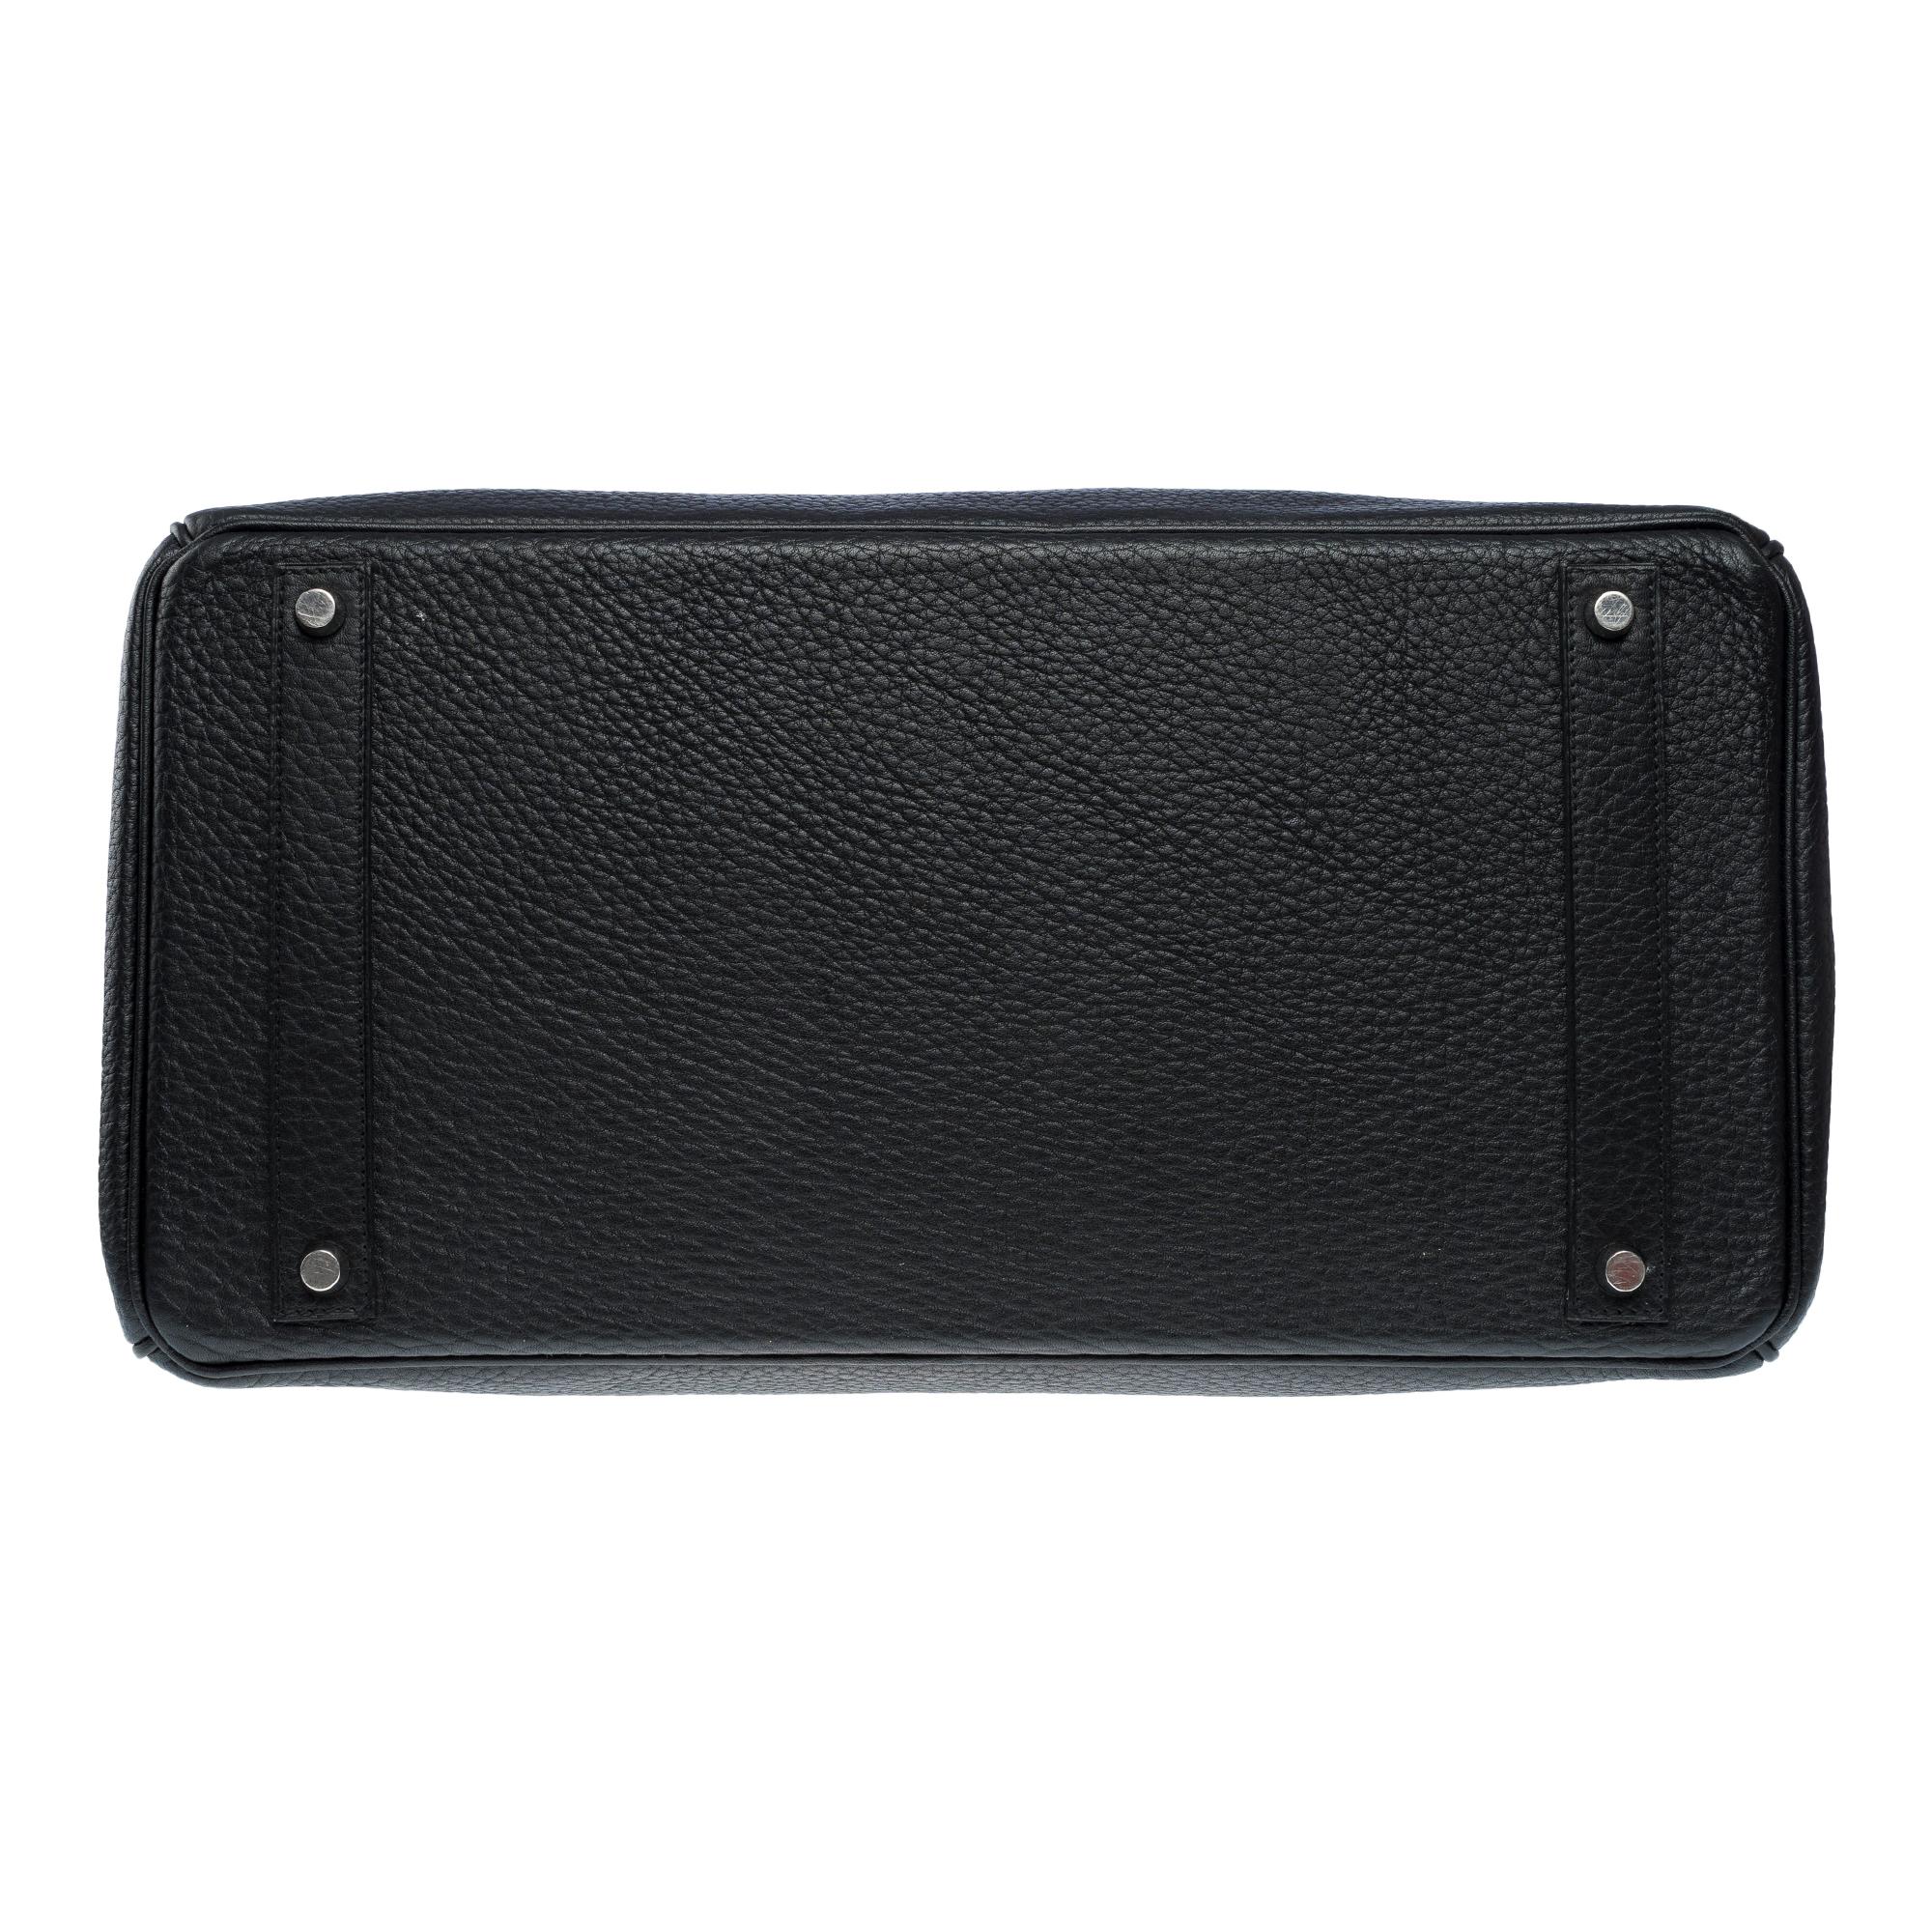 Classy Hermes Birkin 40cm handbag in Black Fjord calf leather, SHW For Sale 6